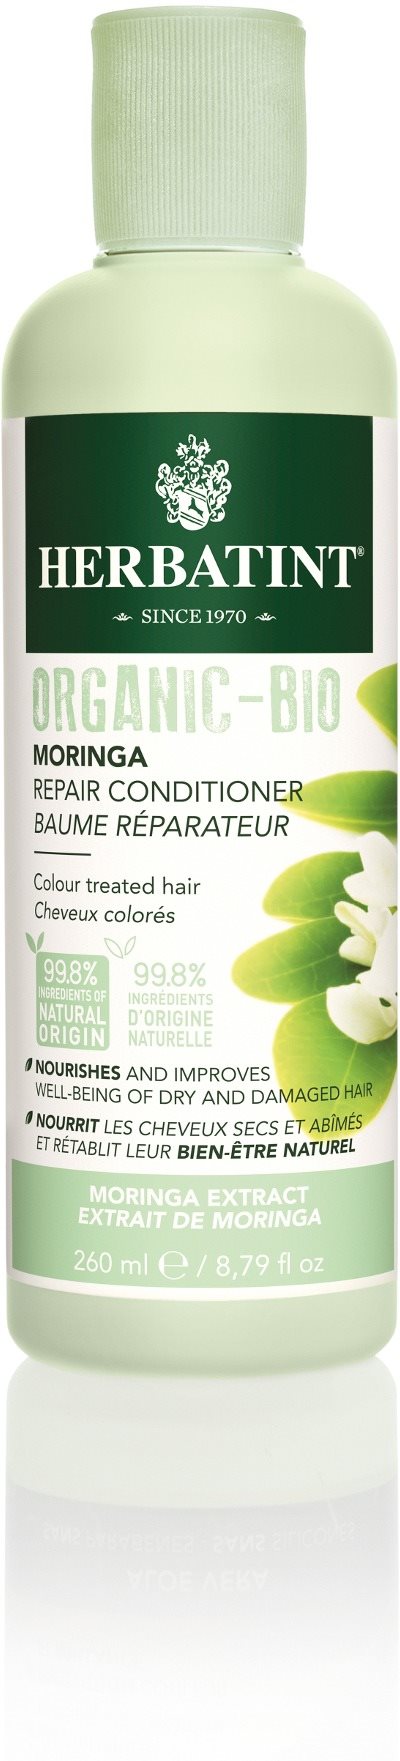 HERBATINT Organic Bio Moringa Conditioner 260 ml